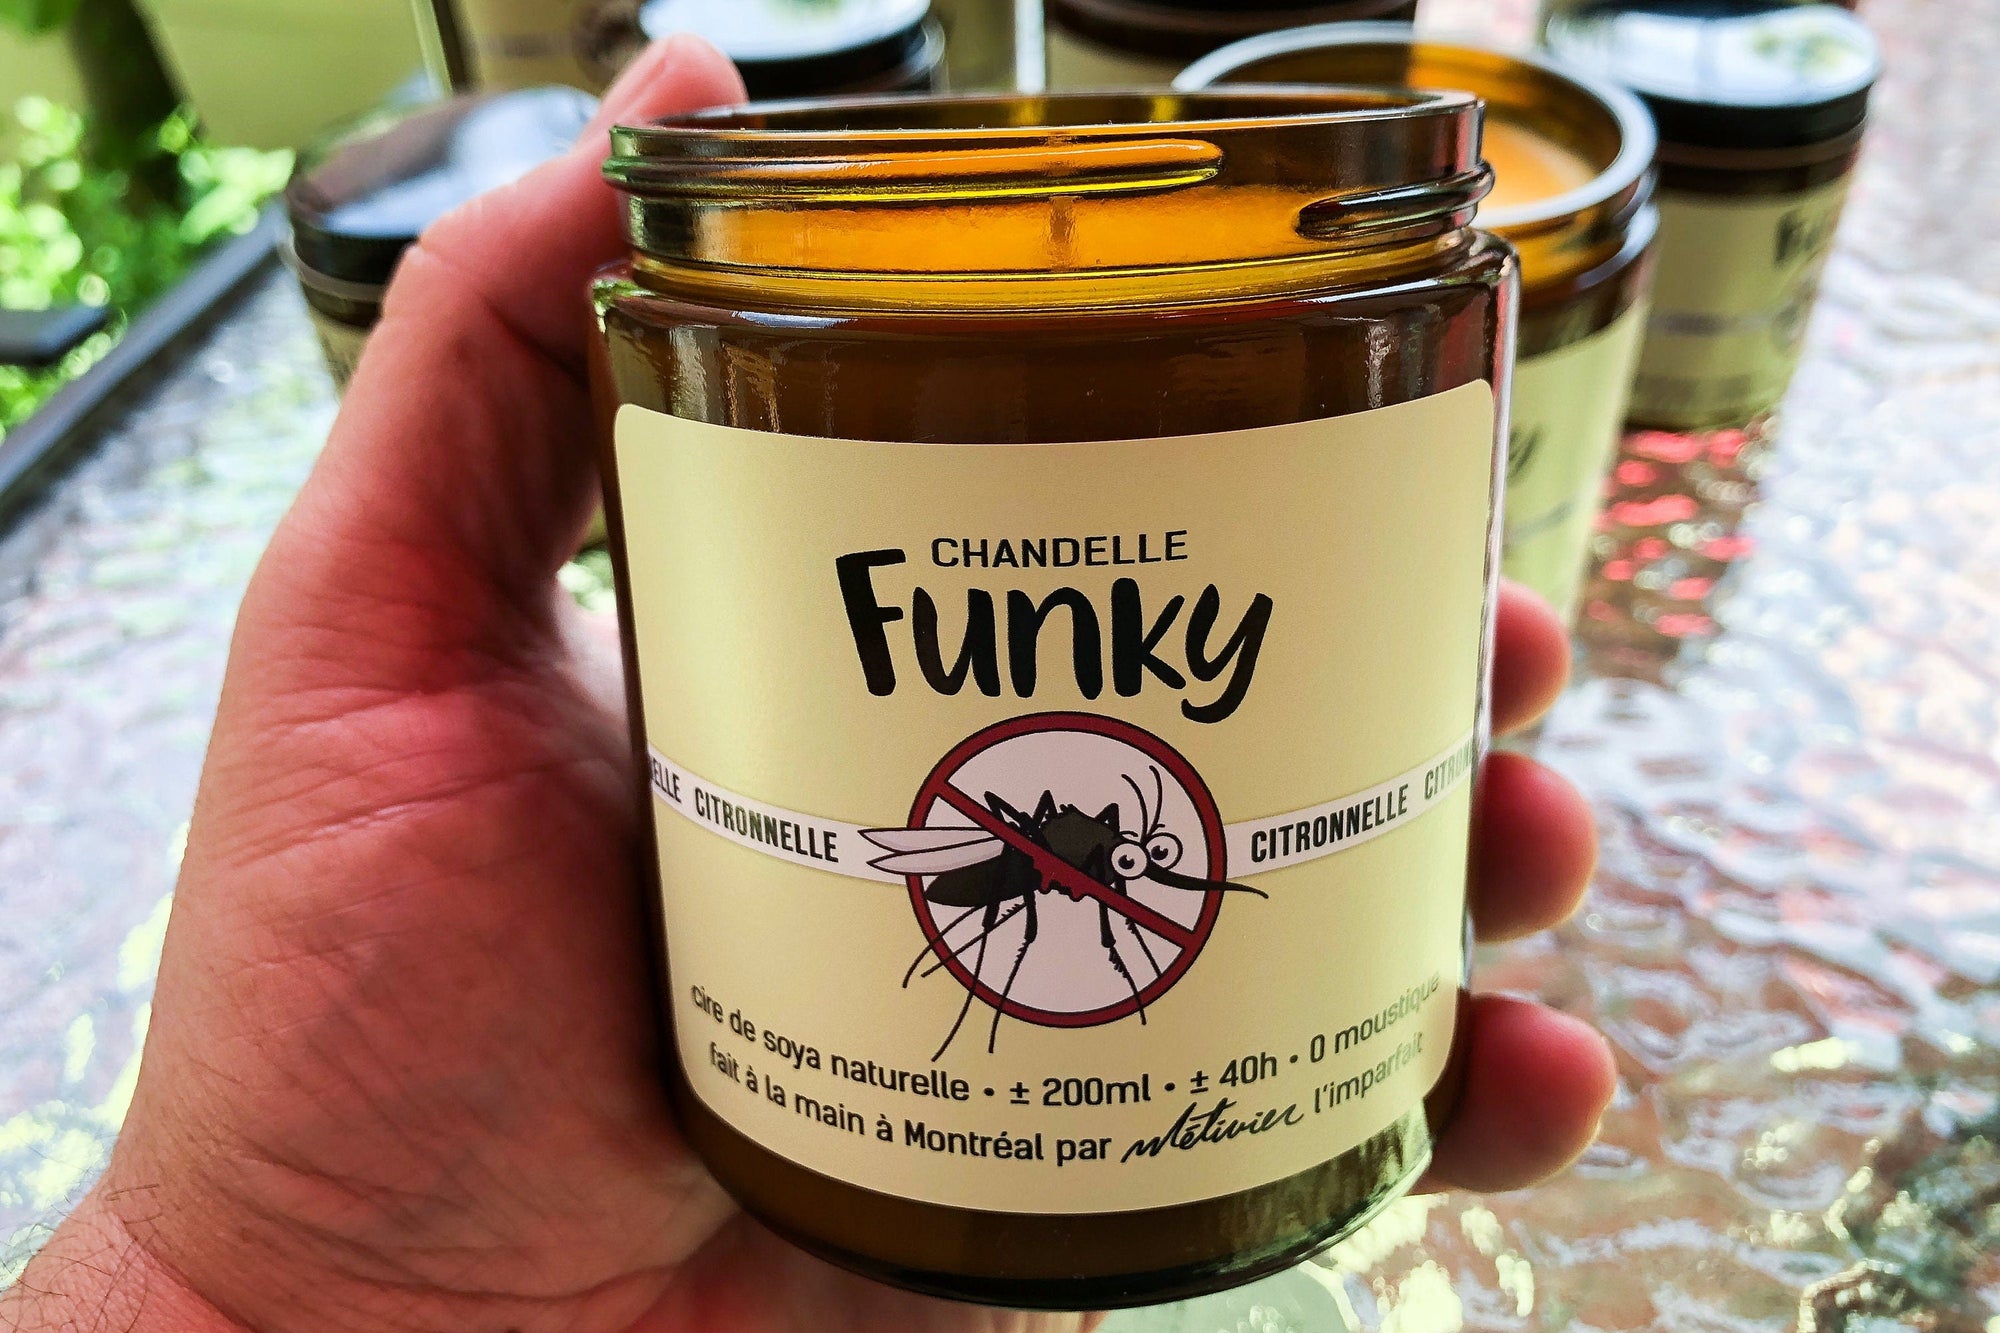 Chandelle Citronnelle - Funky - Funky & Co.